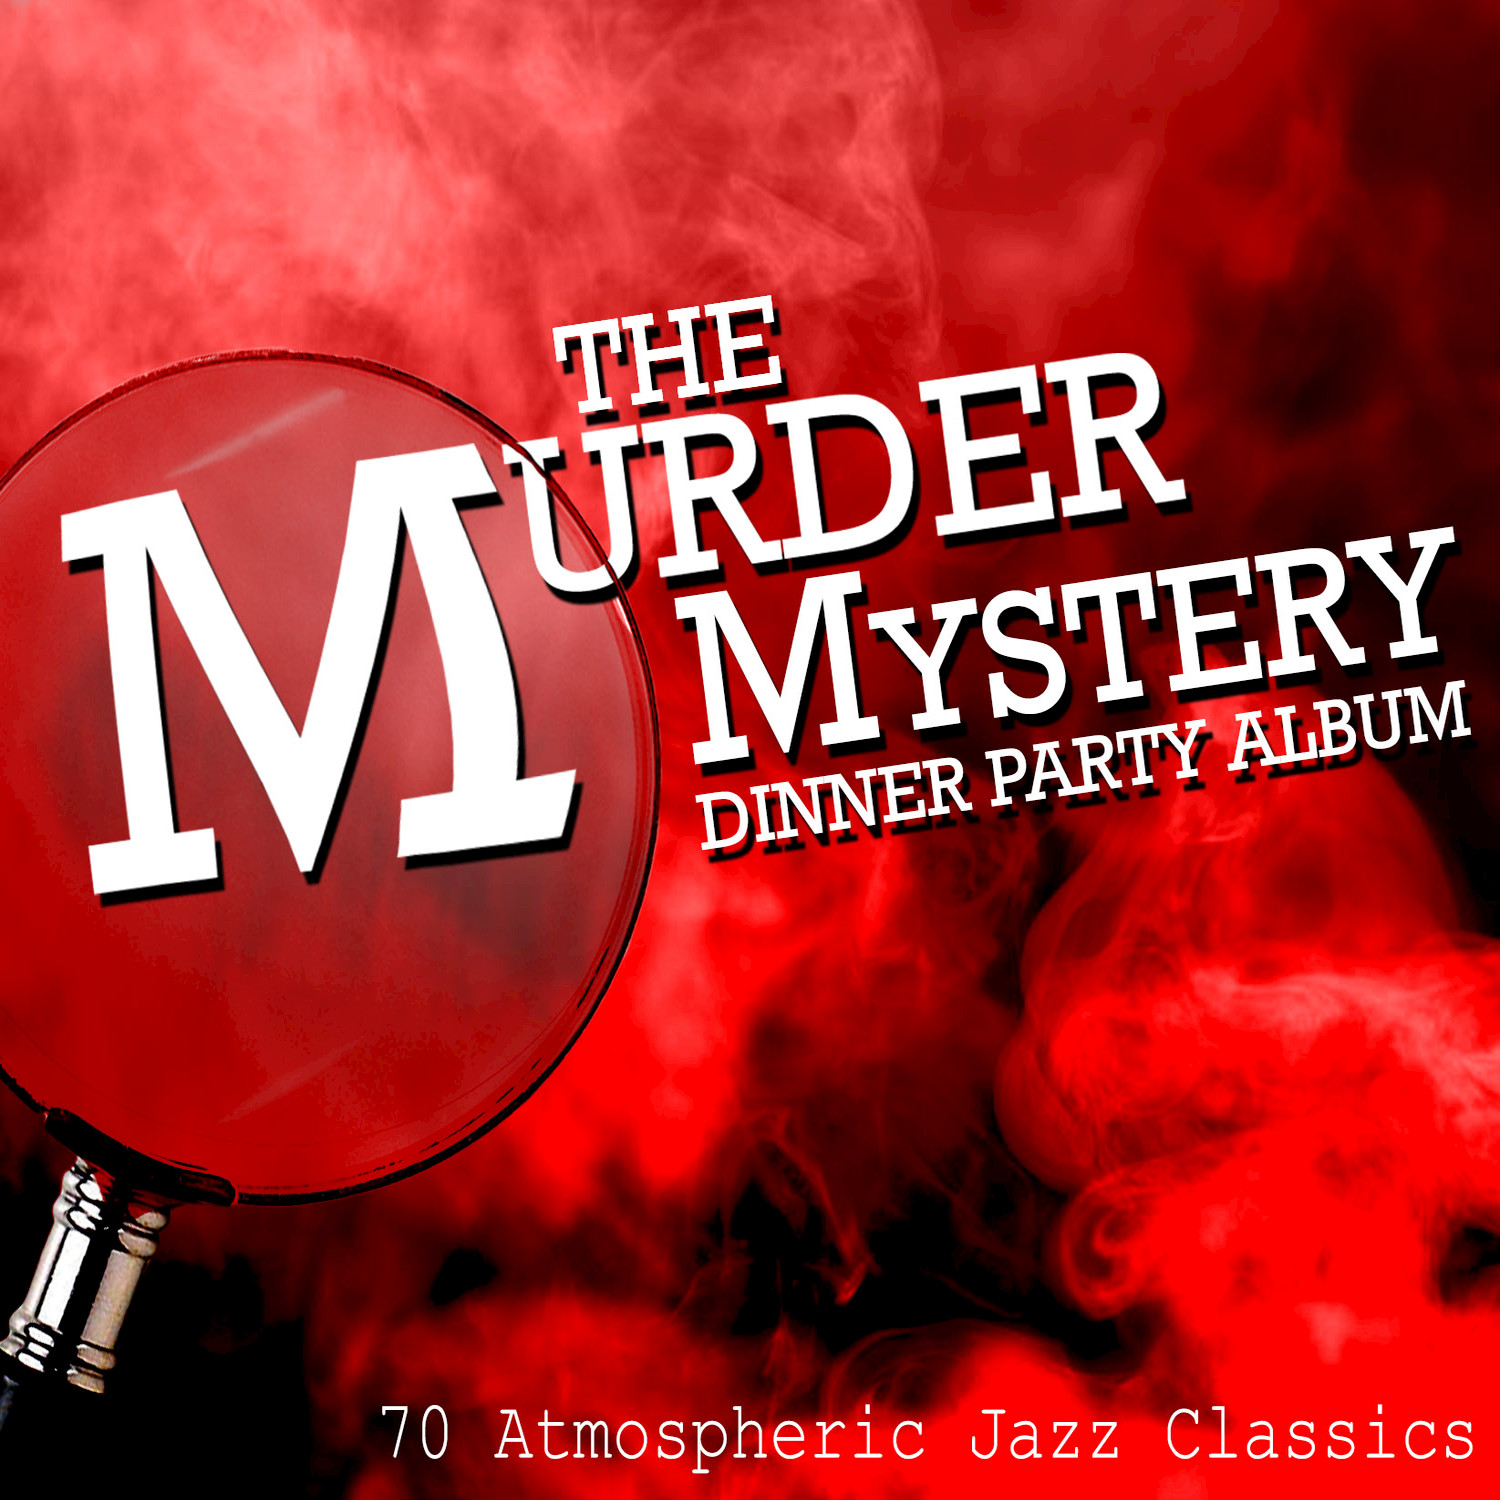 The Murder Mystery Dinner Party Album - 70 Atmospheric Jazz Classics